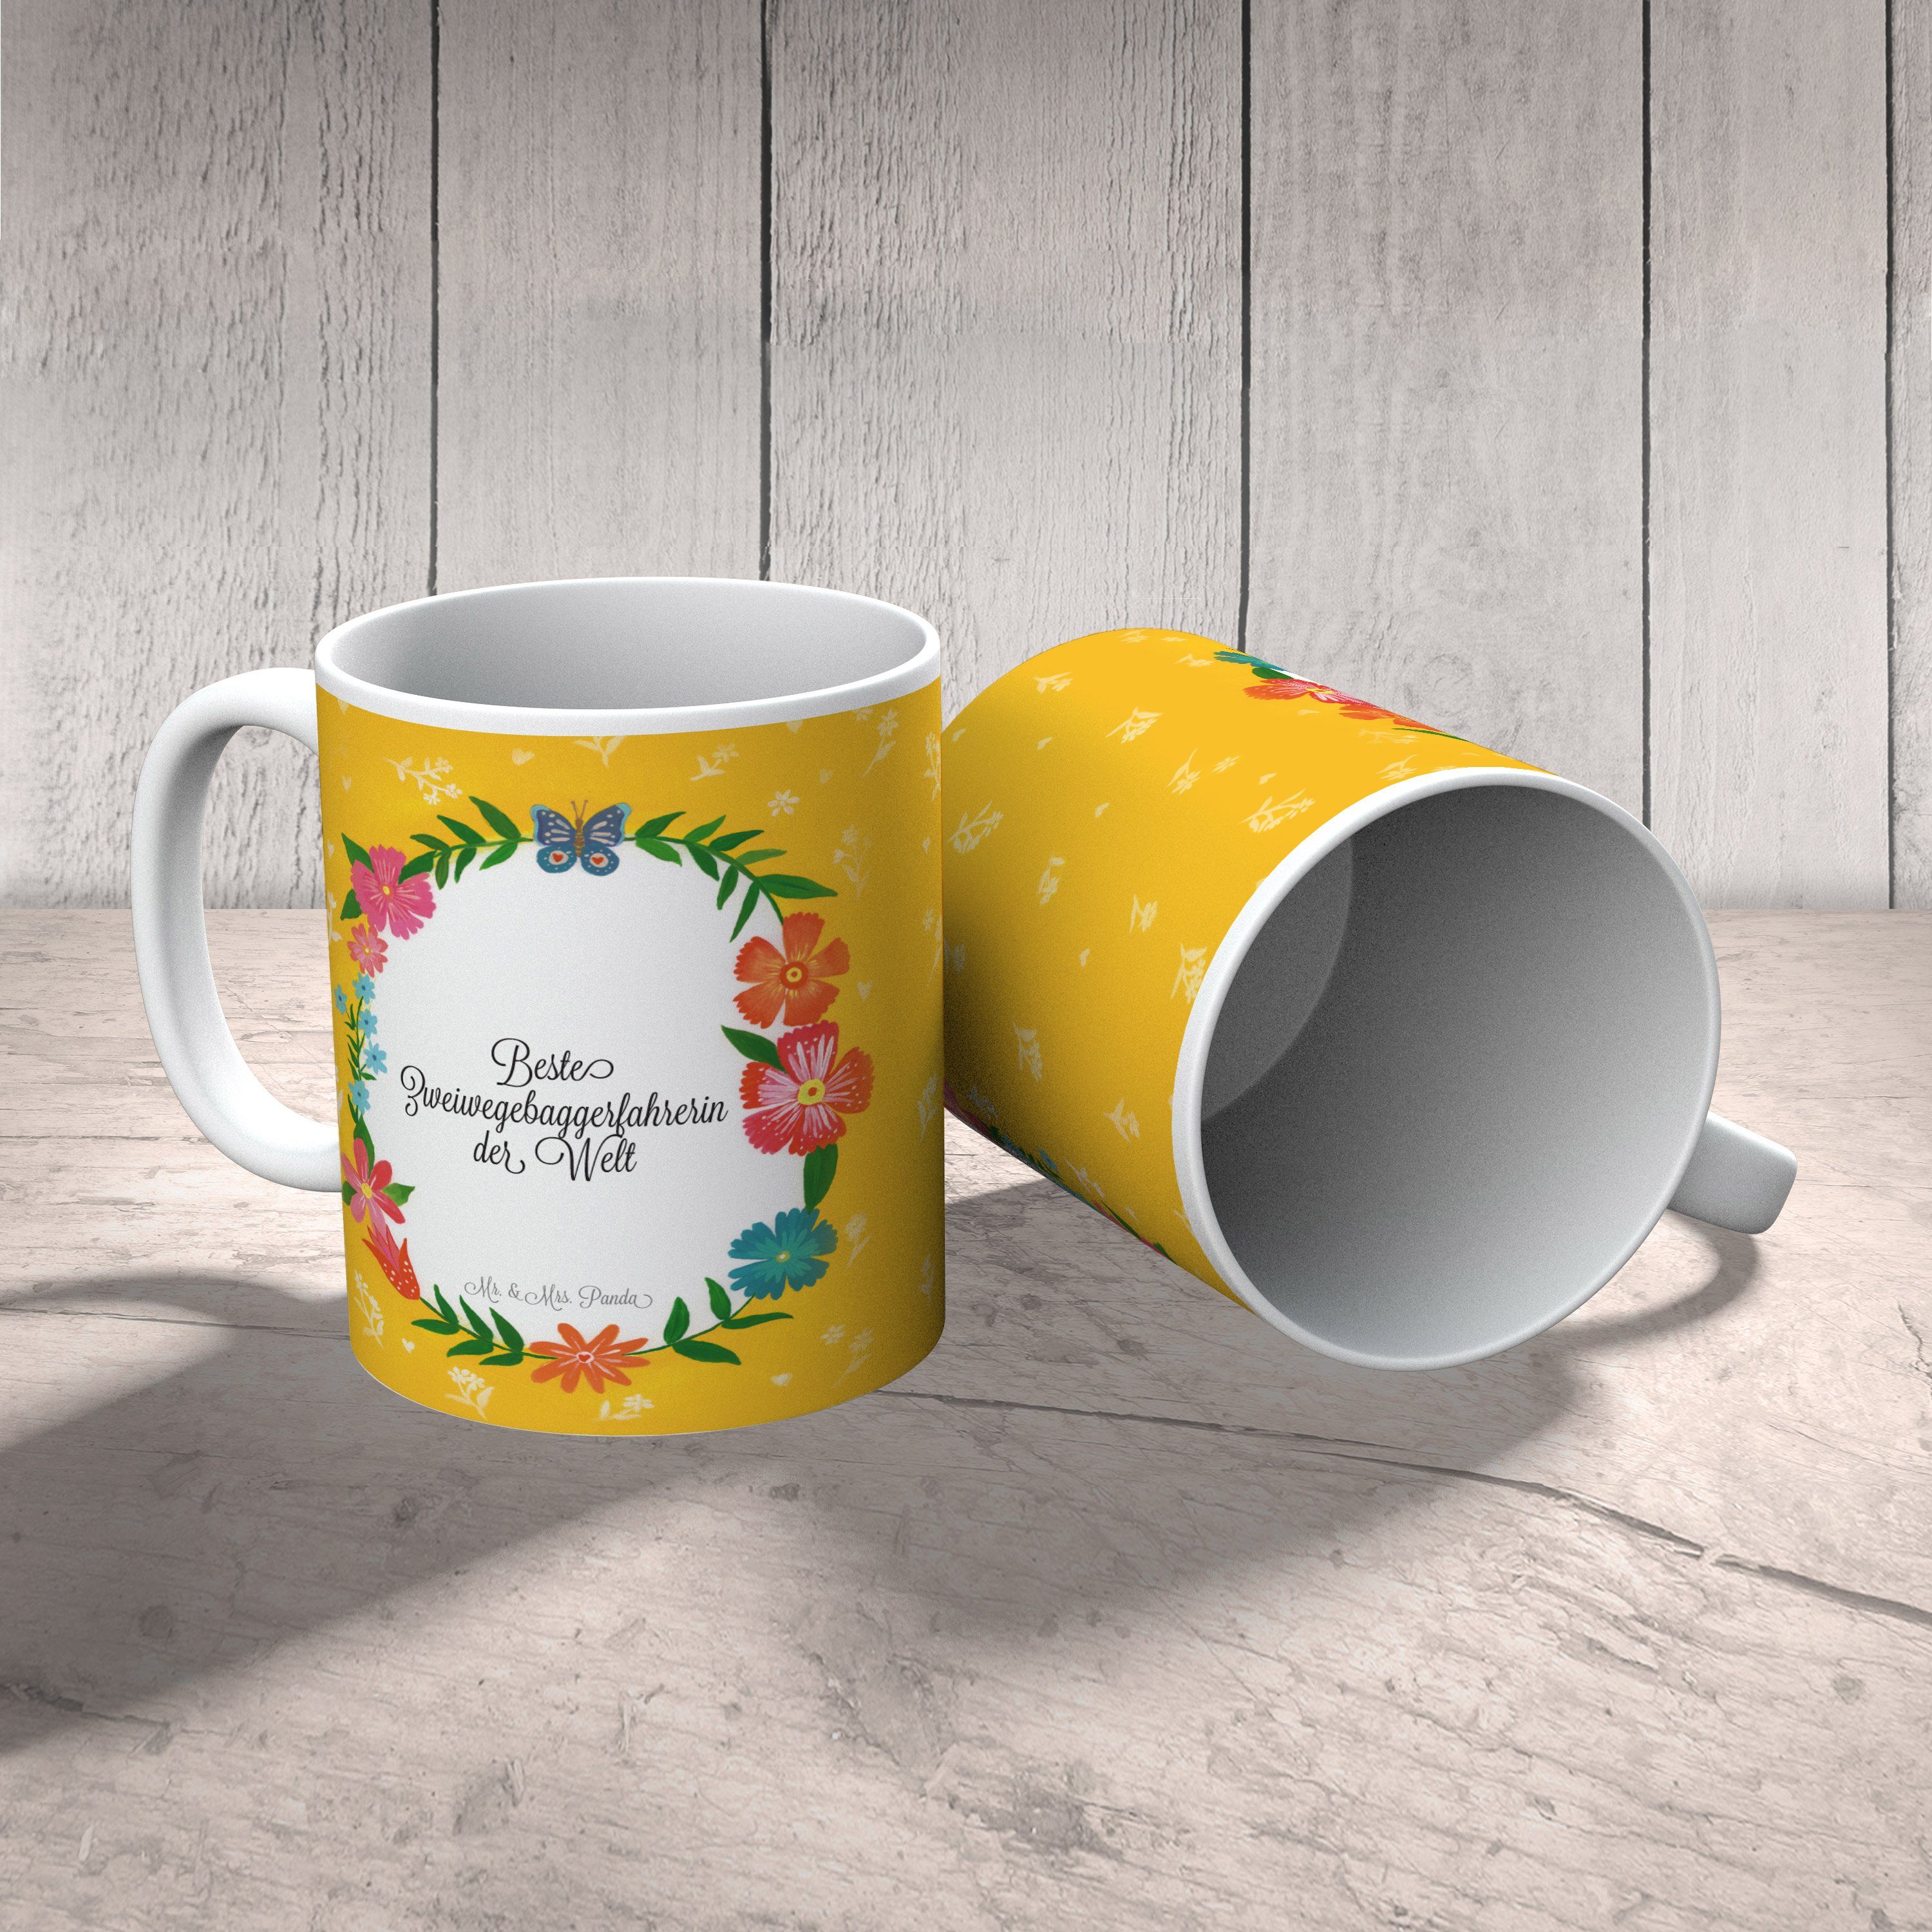 Mr. & Mrs. Panda Tasse - Keramik Kaffeebecher, Beruf, Tasse, Zweiwegebaggerfahrerin Geschenk, Kerami